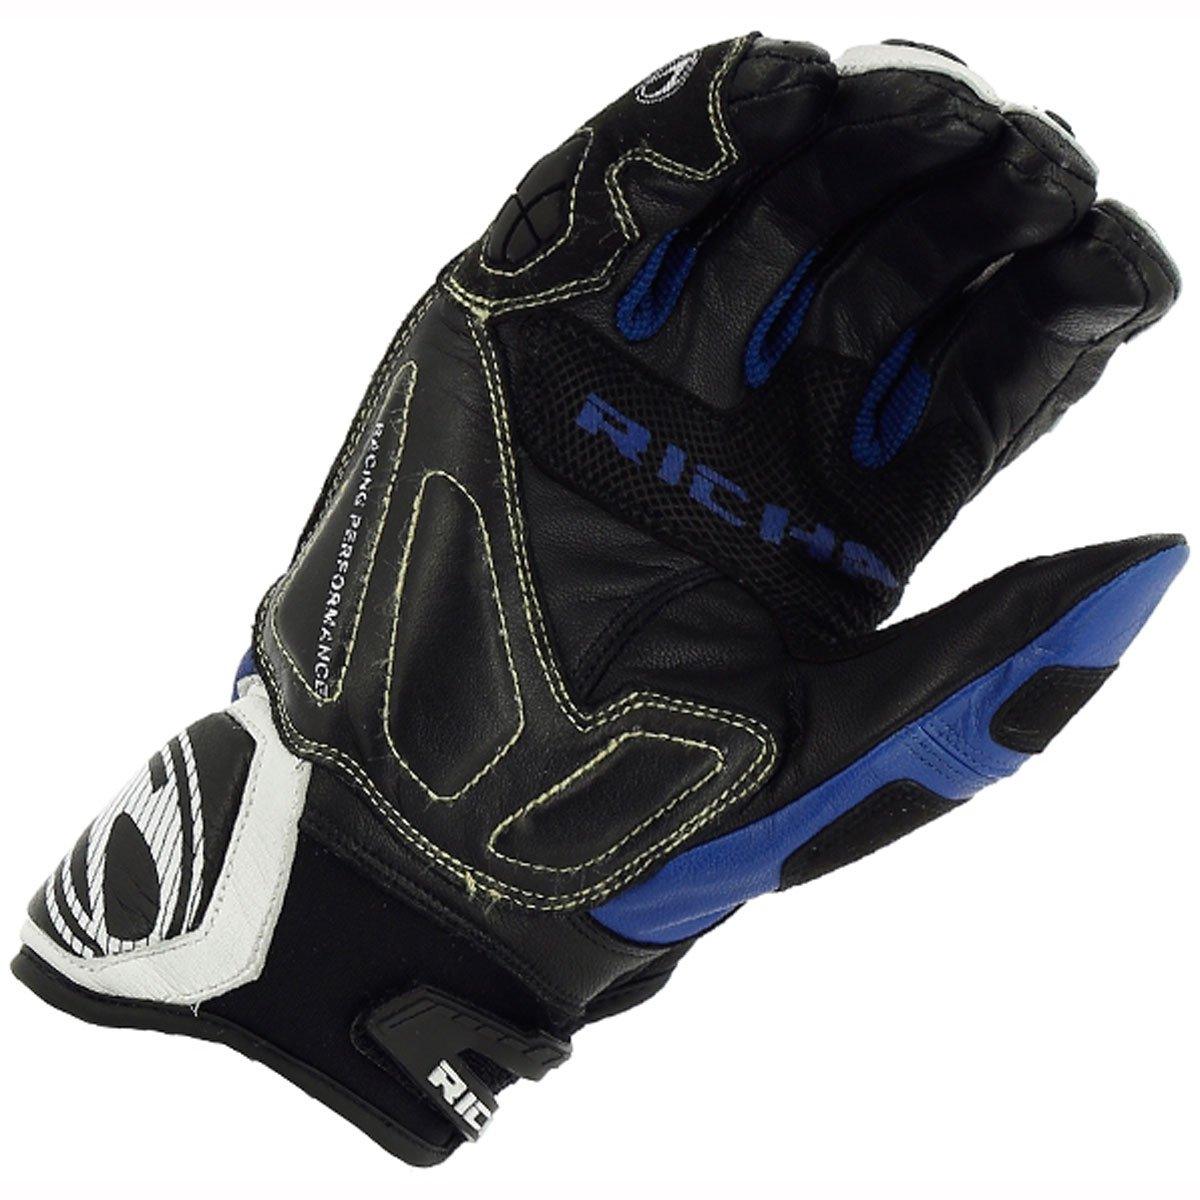 Richa Stealth Gloves Black White Blue - Mesh Motorcycle Gloves